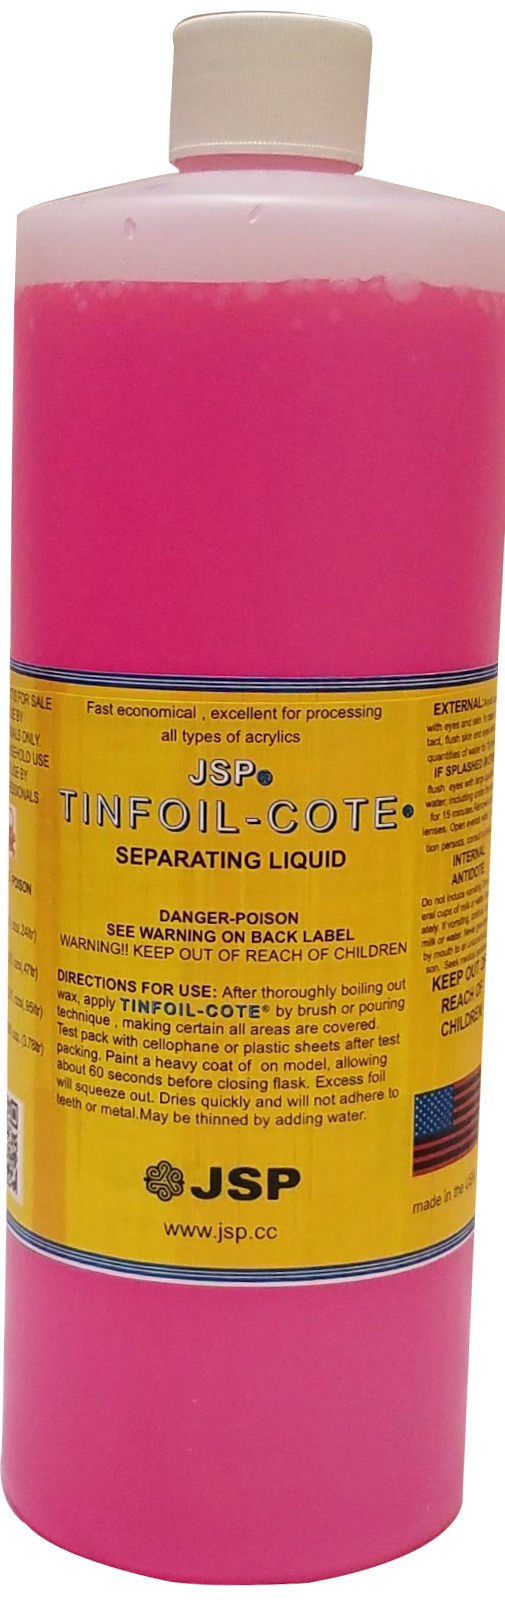 JSP® TINFOIL-COTE SEPARATING LIQUID 32 ozs